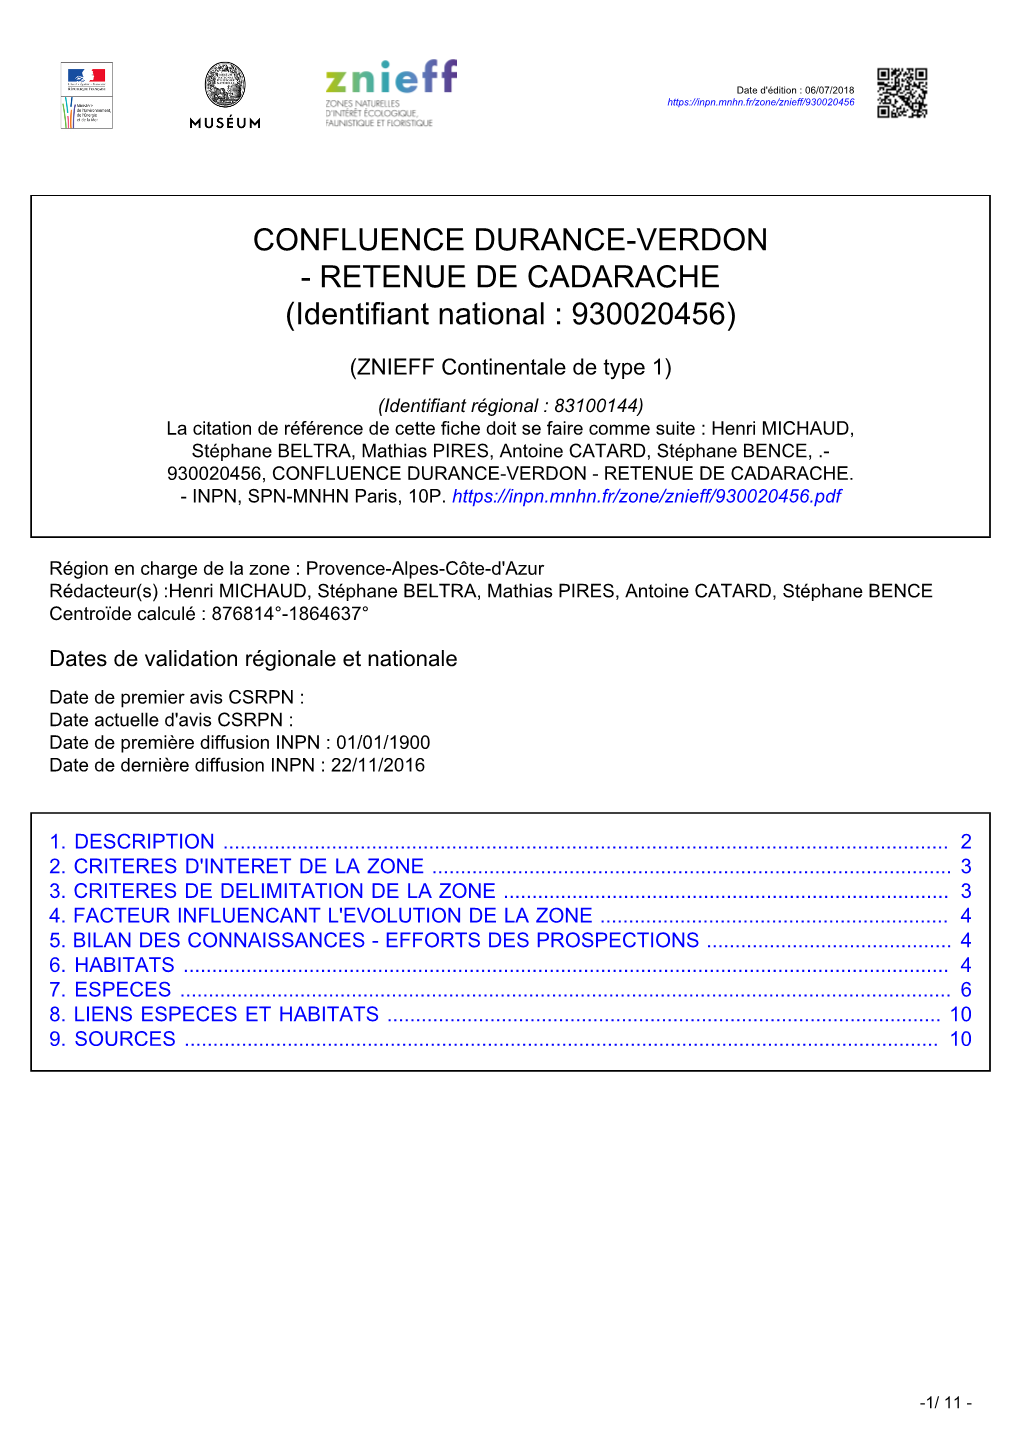 CONFLUENCE DURANCE-VERDON - RETENUE DE CADARACHE (Identifiant National : 930020456)